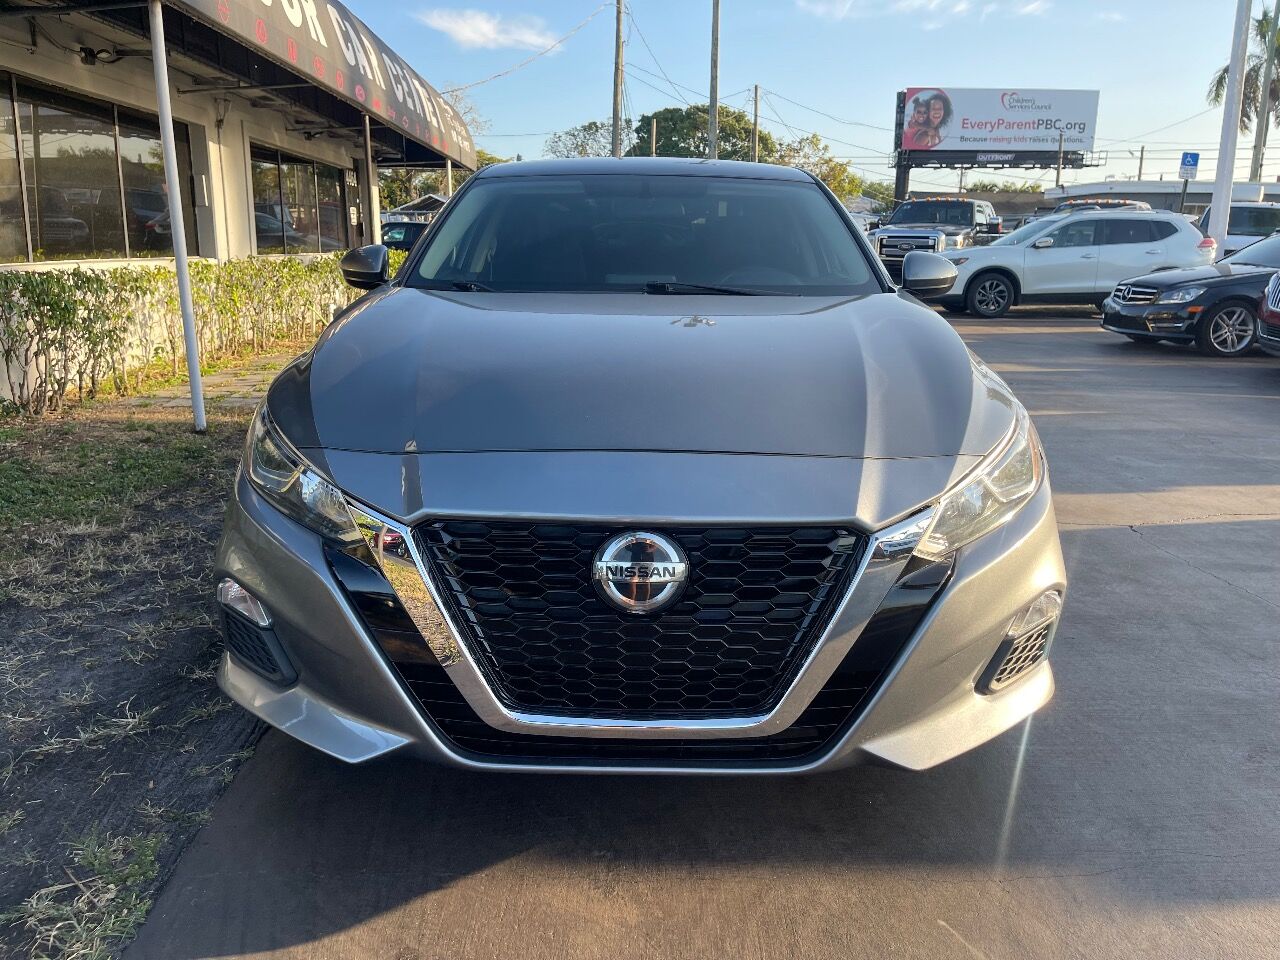 2019 NISSAN Altima Sedan - $18,900